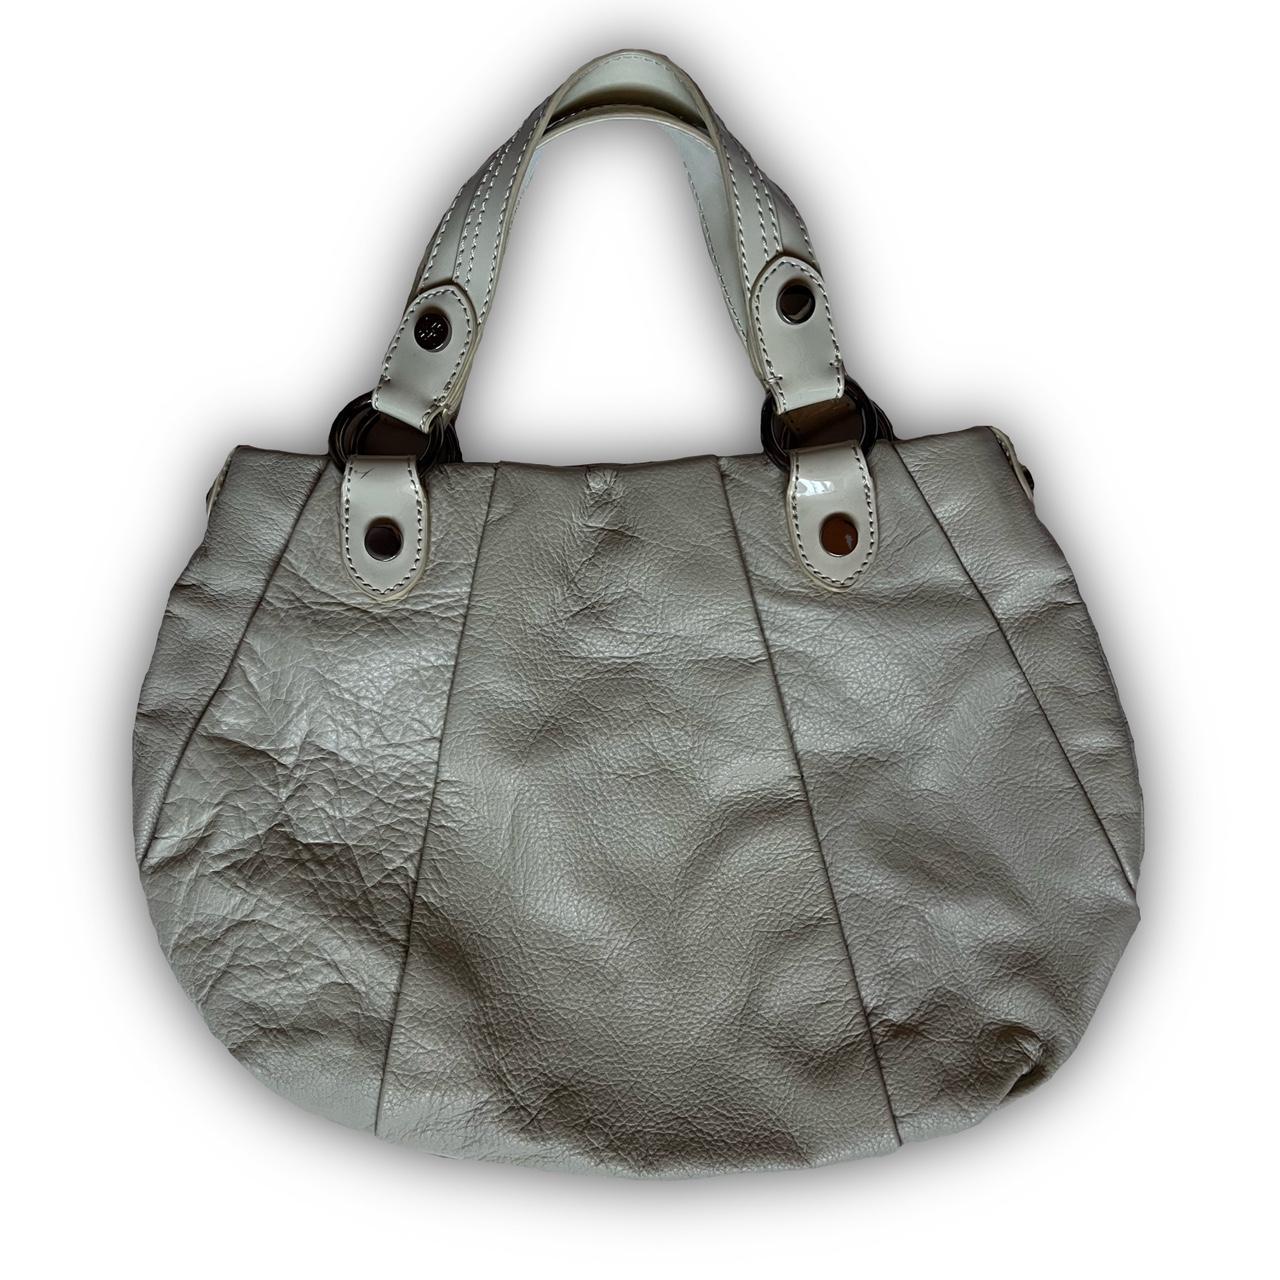 Simply Vera Vera Wang crossbody purse, small, purple ombre, 100% PU, chain  | eBay